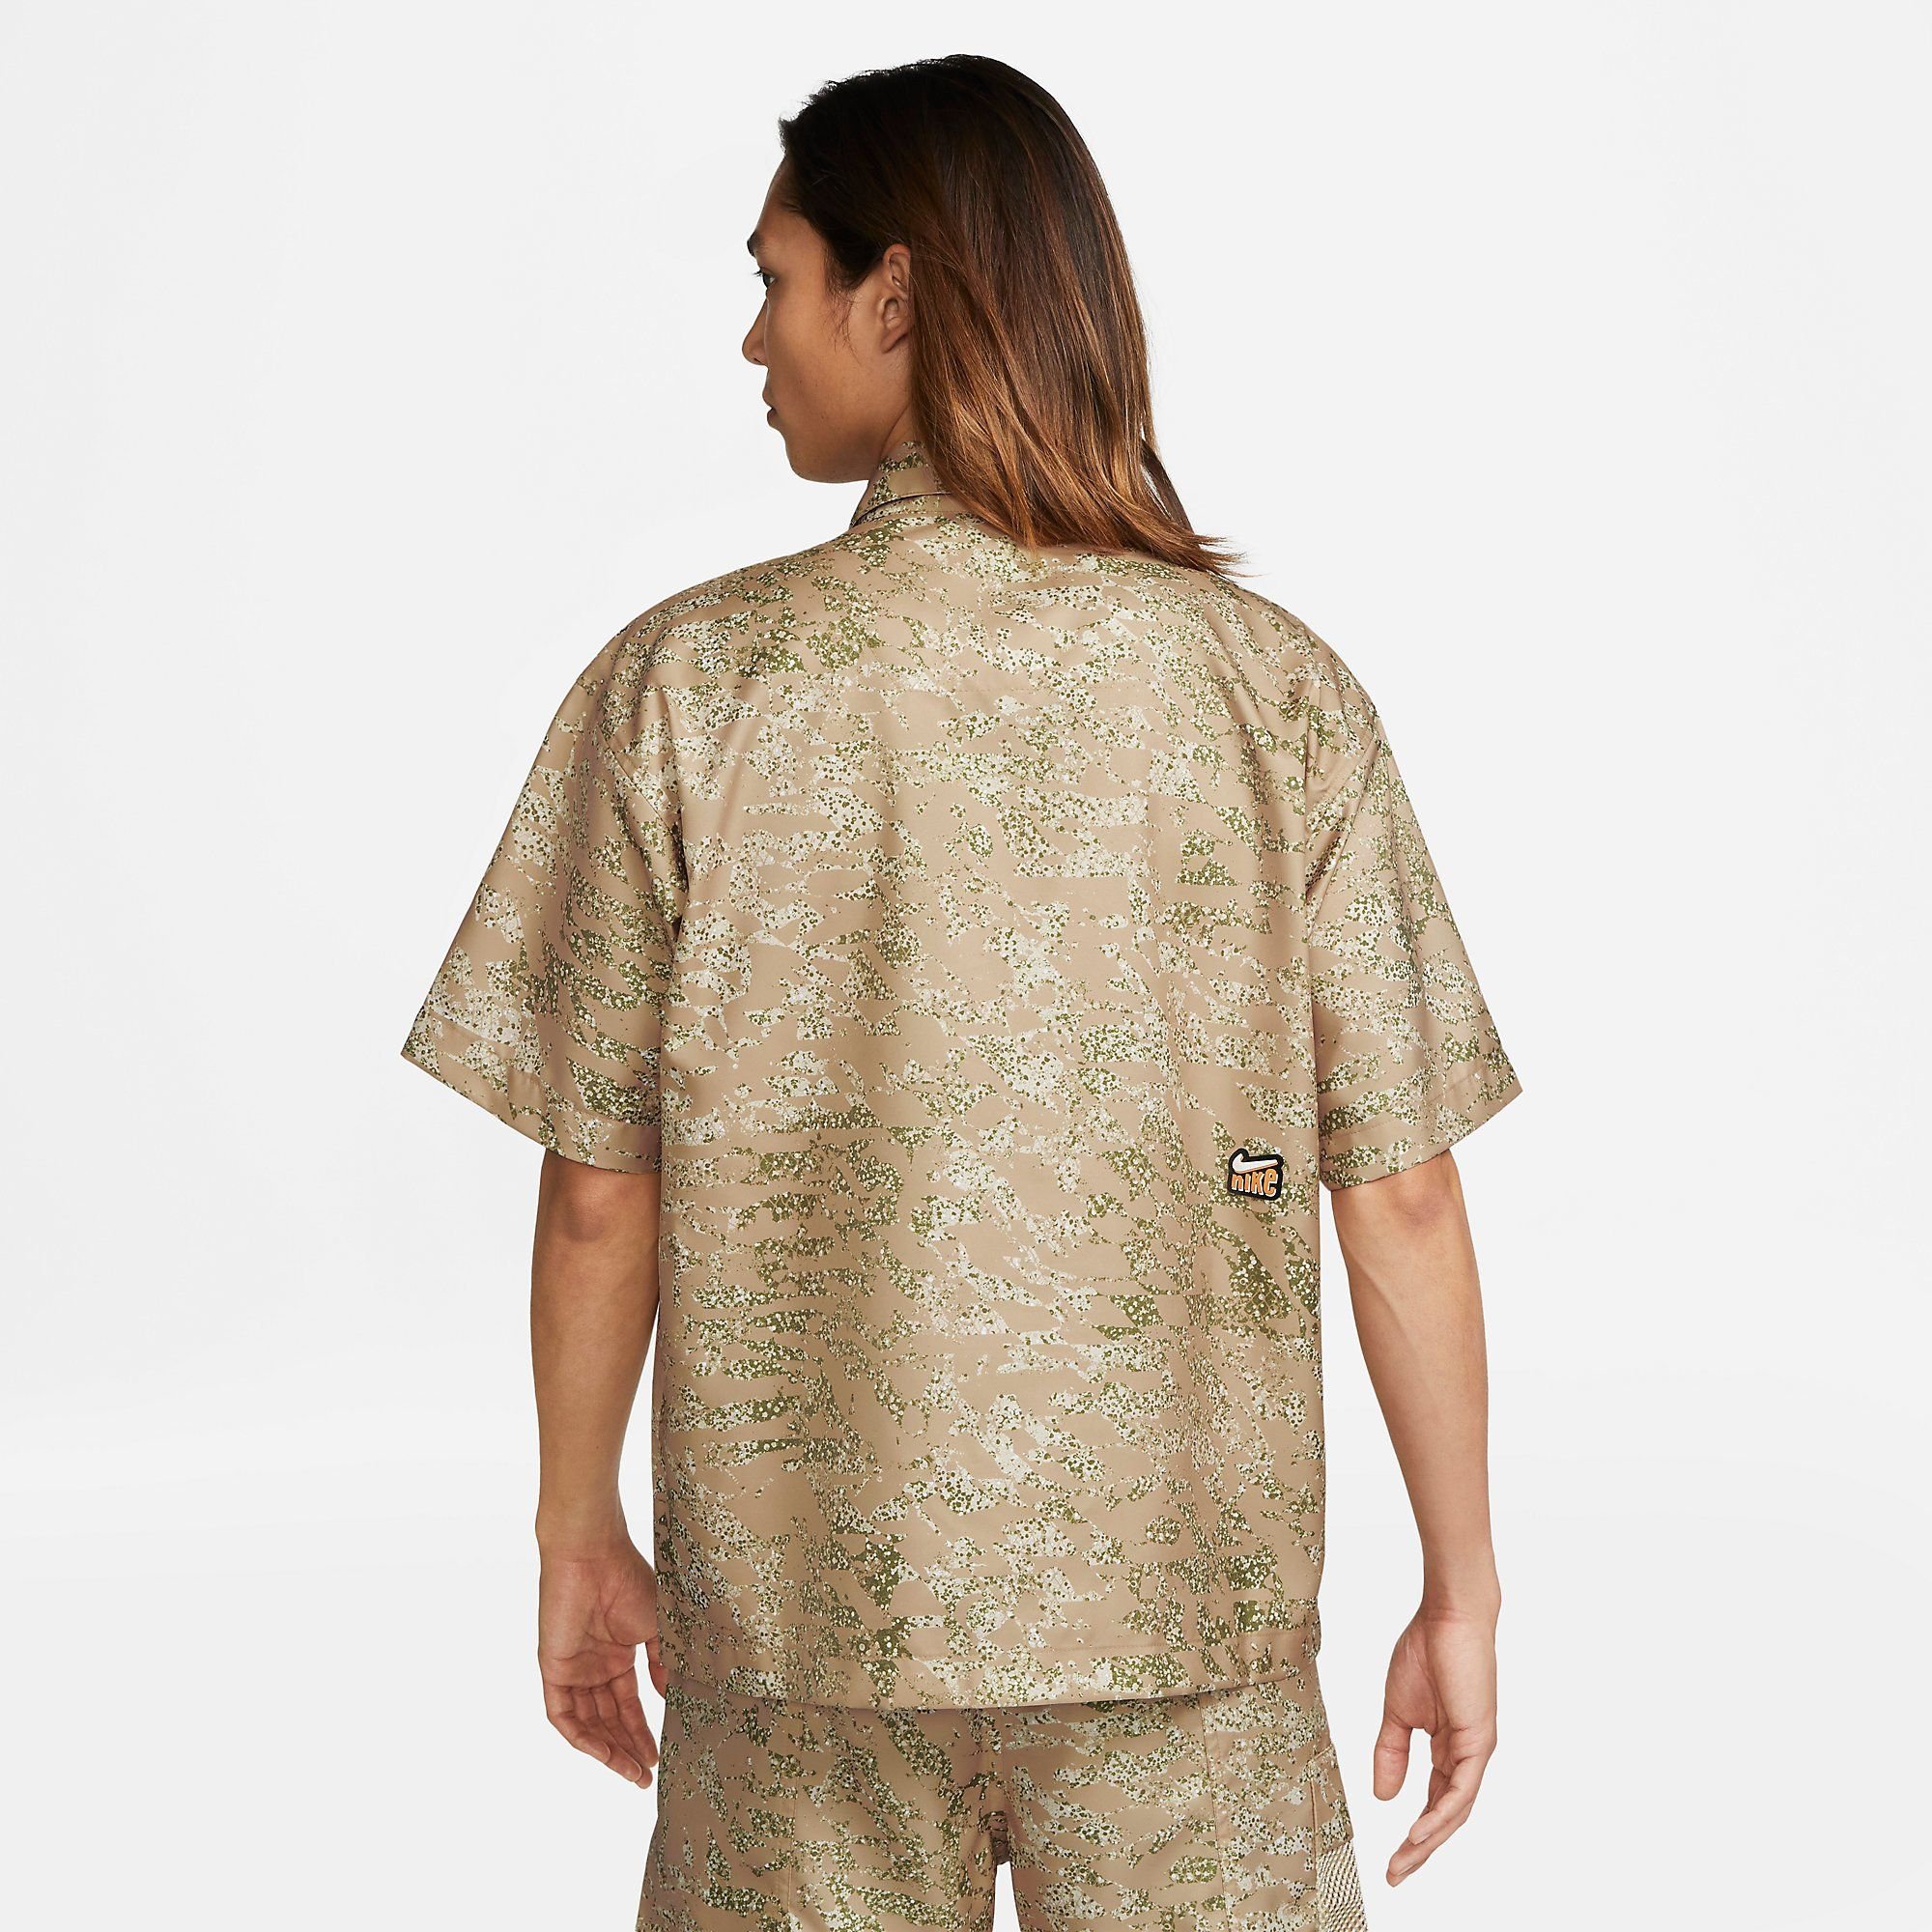  Nike Dri-FIT Printed Short-Sleeve Shirt - Beige 